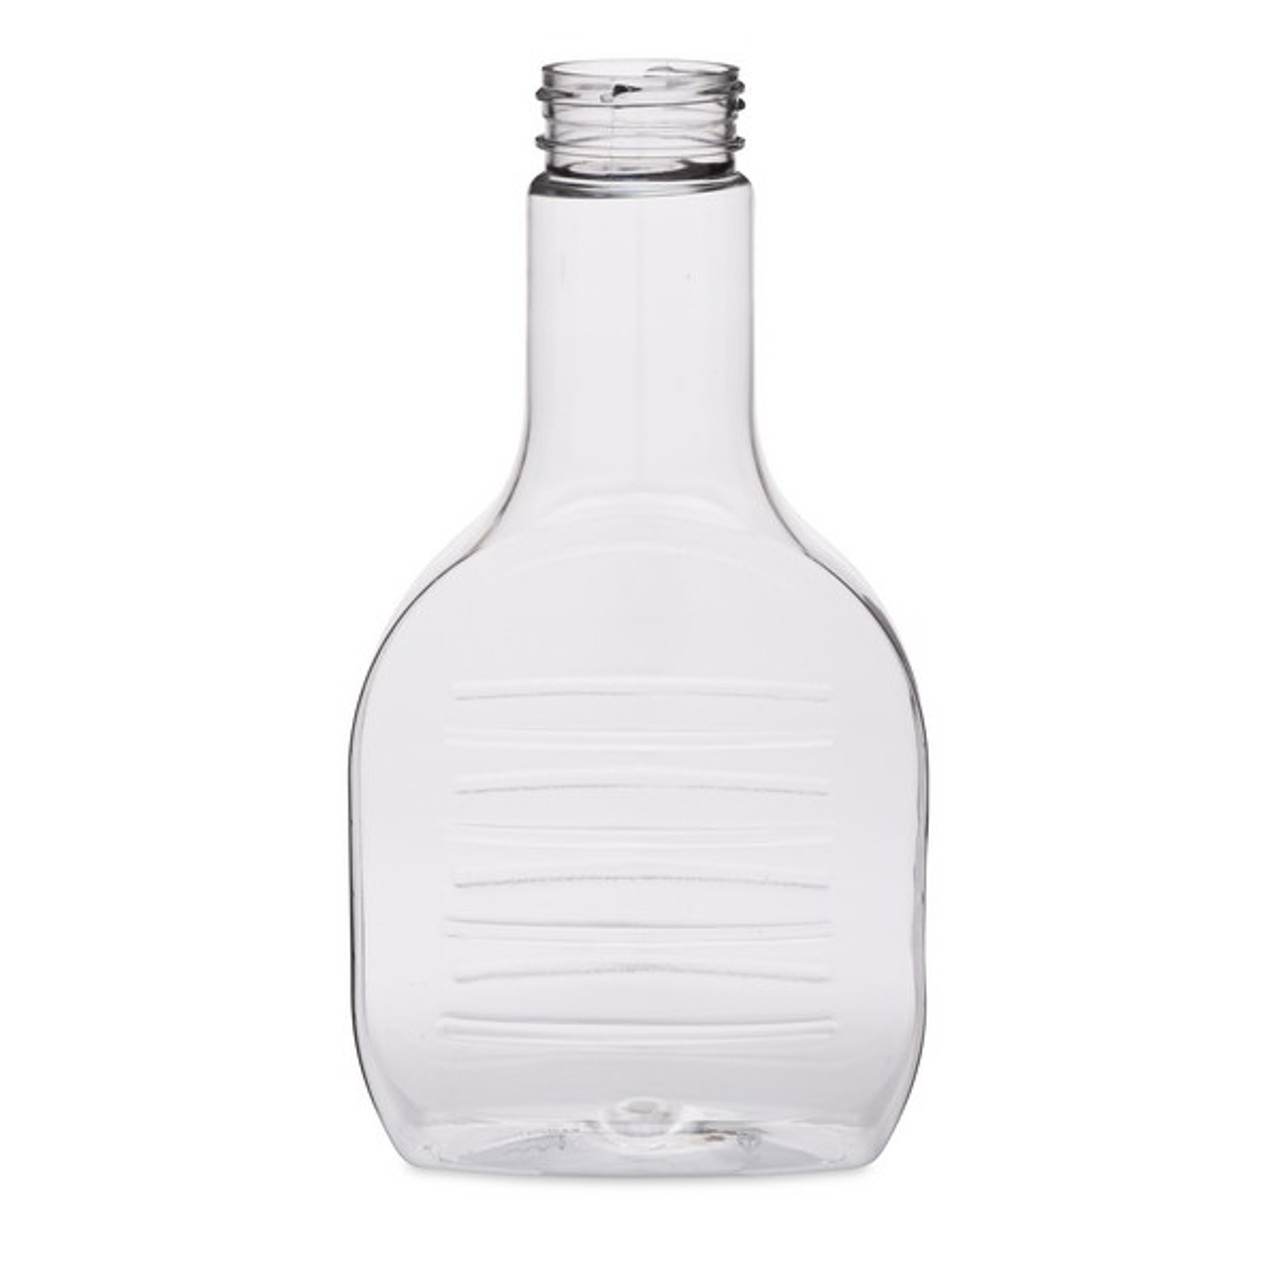 12 oz Clear Pet Plastic Beverage Bottles - Clear 38 mm